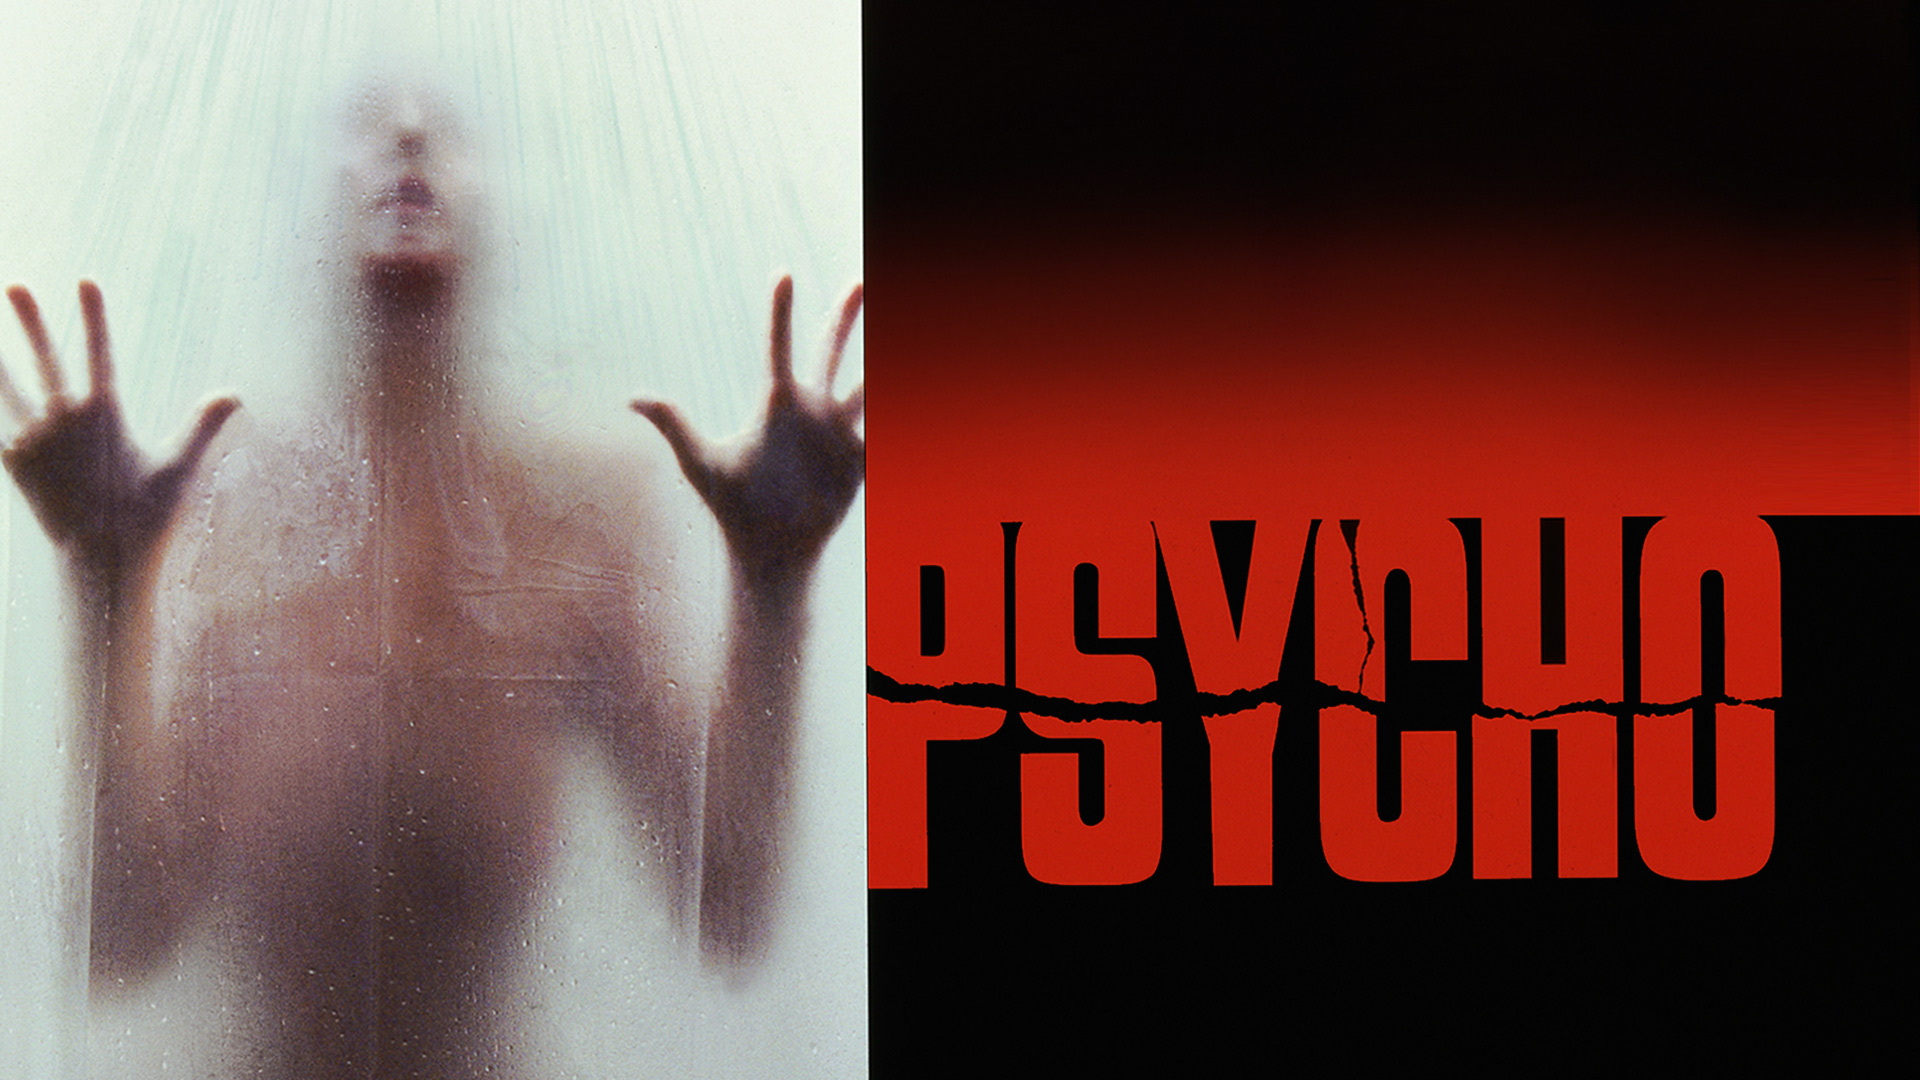 the movie psycho 1998